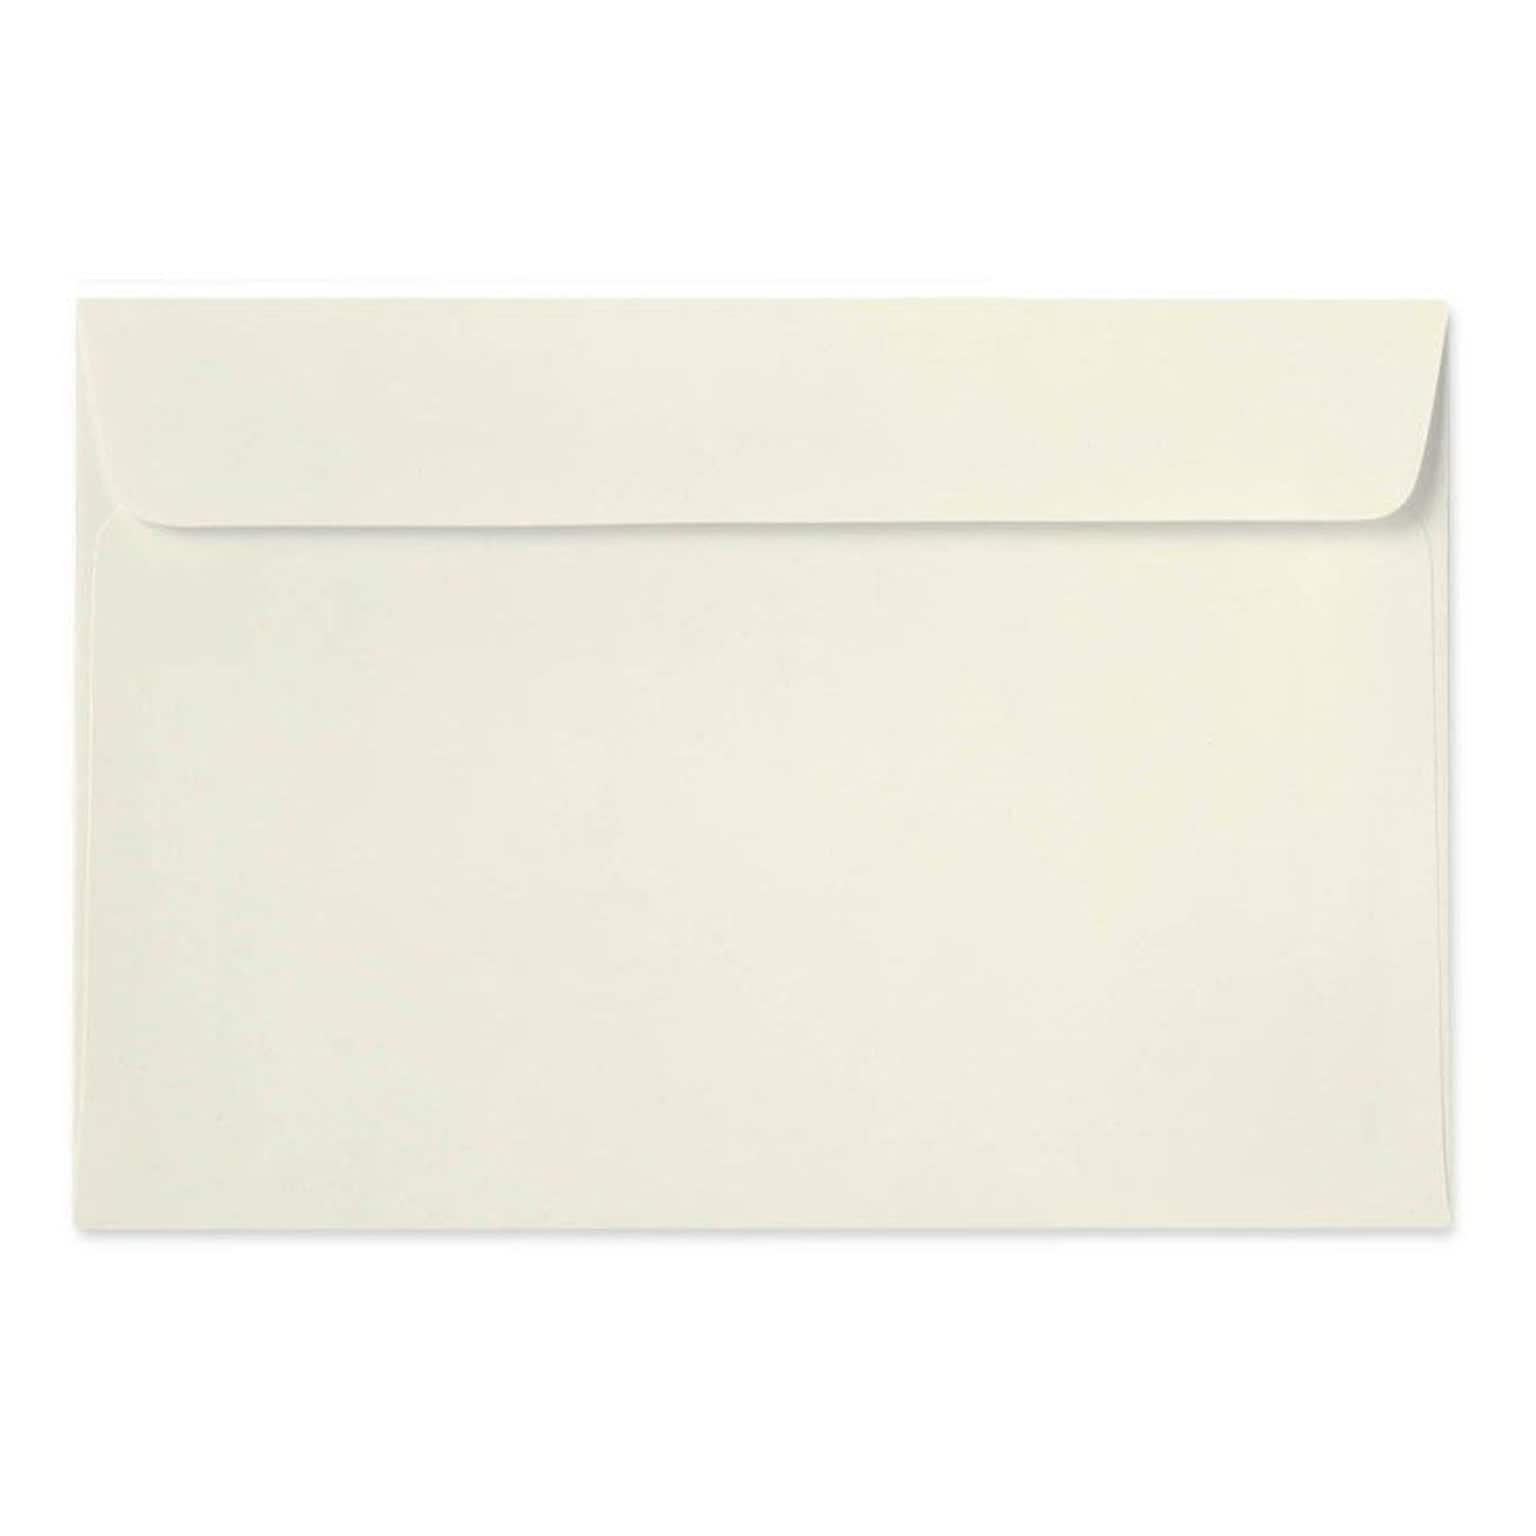 LUX 6 x 9 Booklet Envelopes, 1000/Box, Natural Linen (4820-NLI-1000)